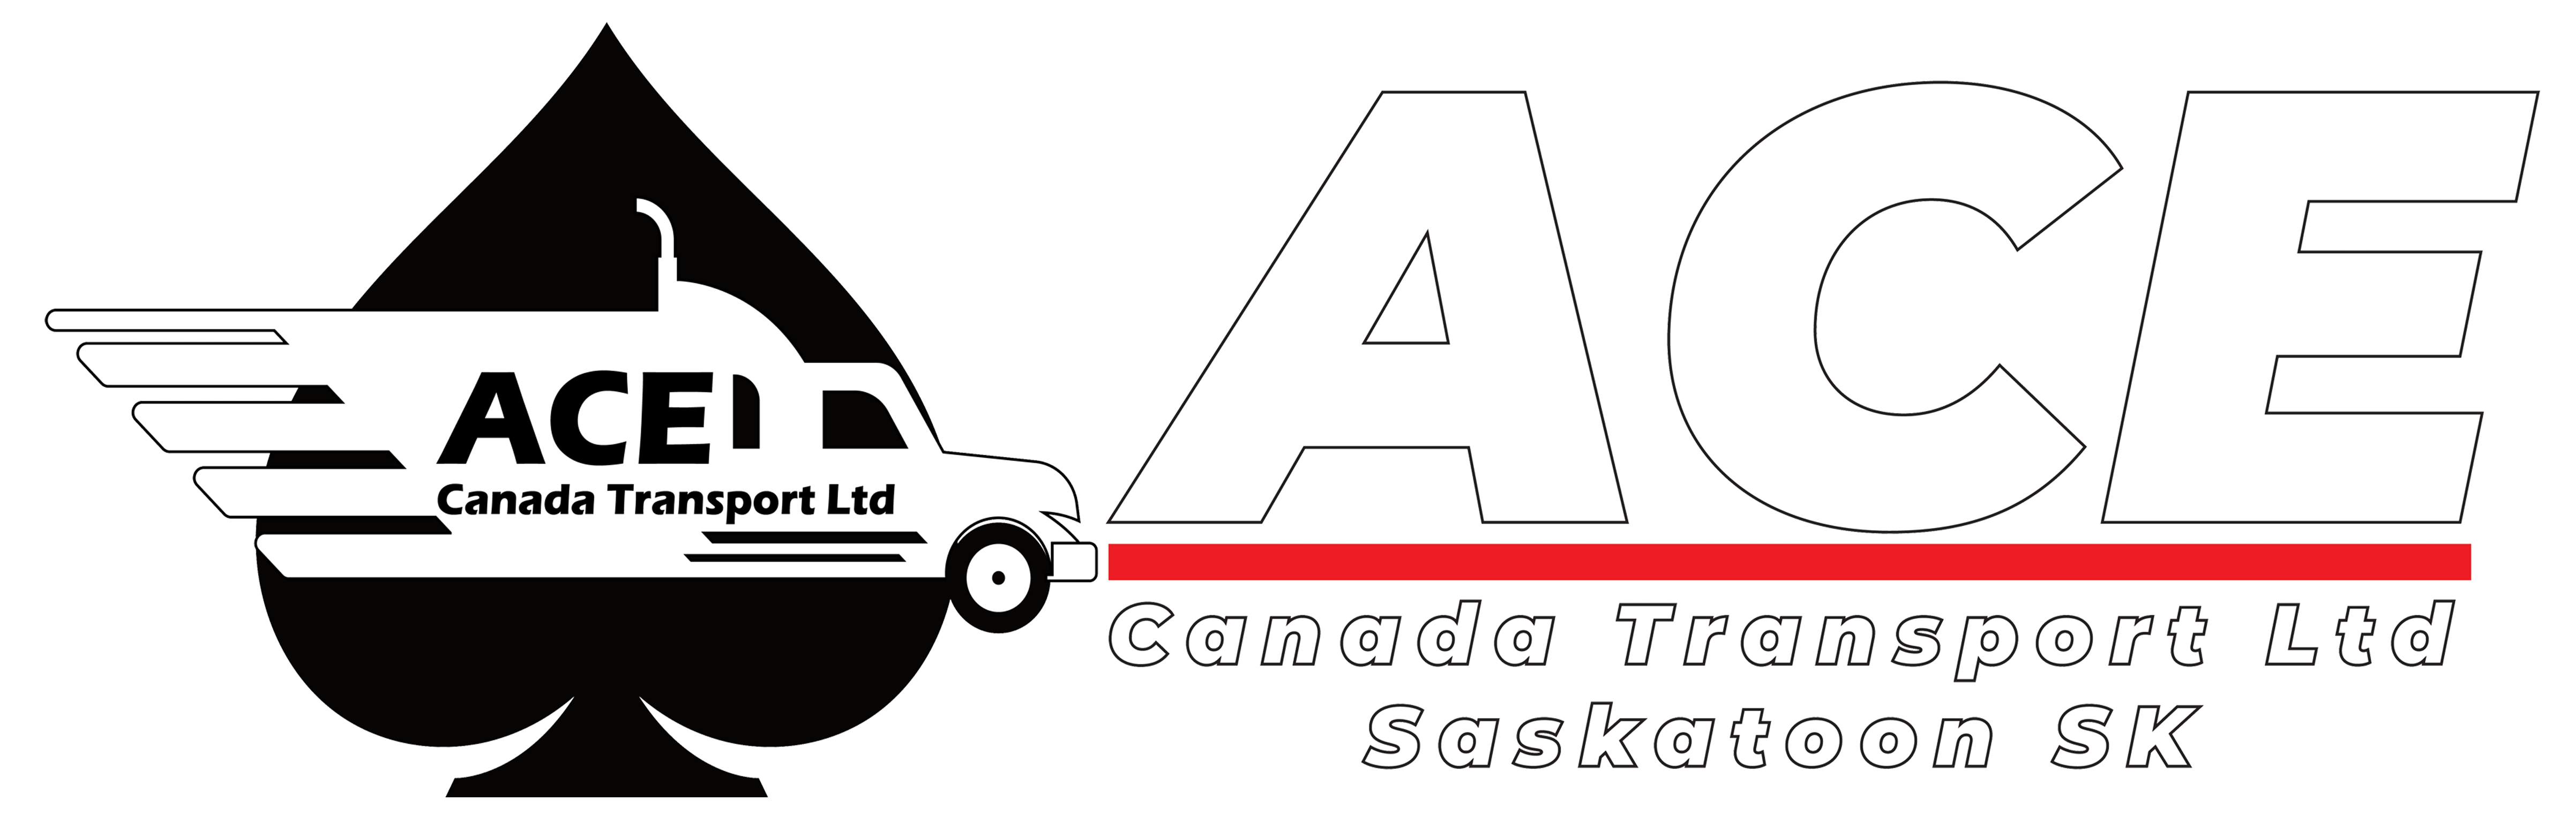 Ace Transport Canada Logo White